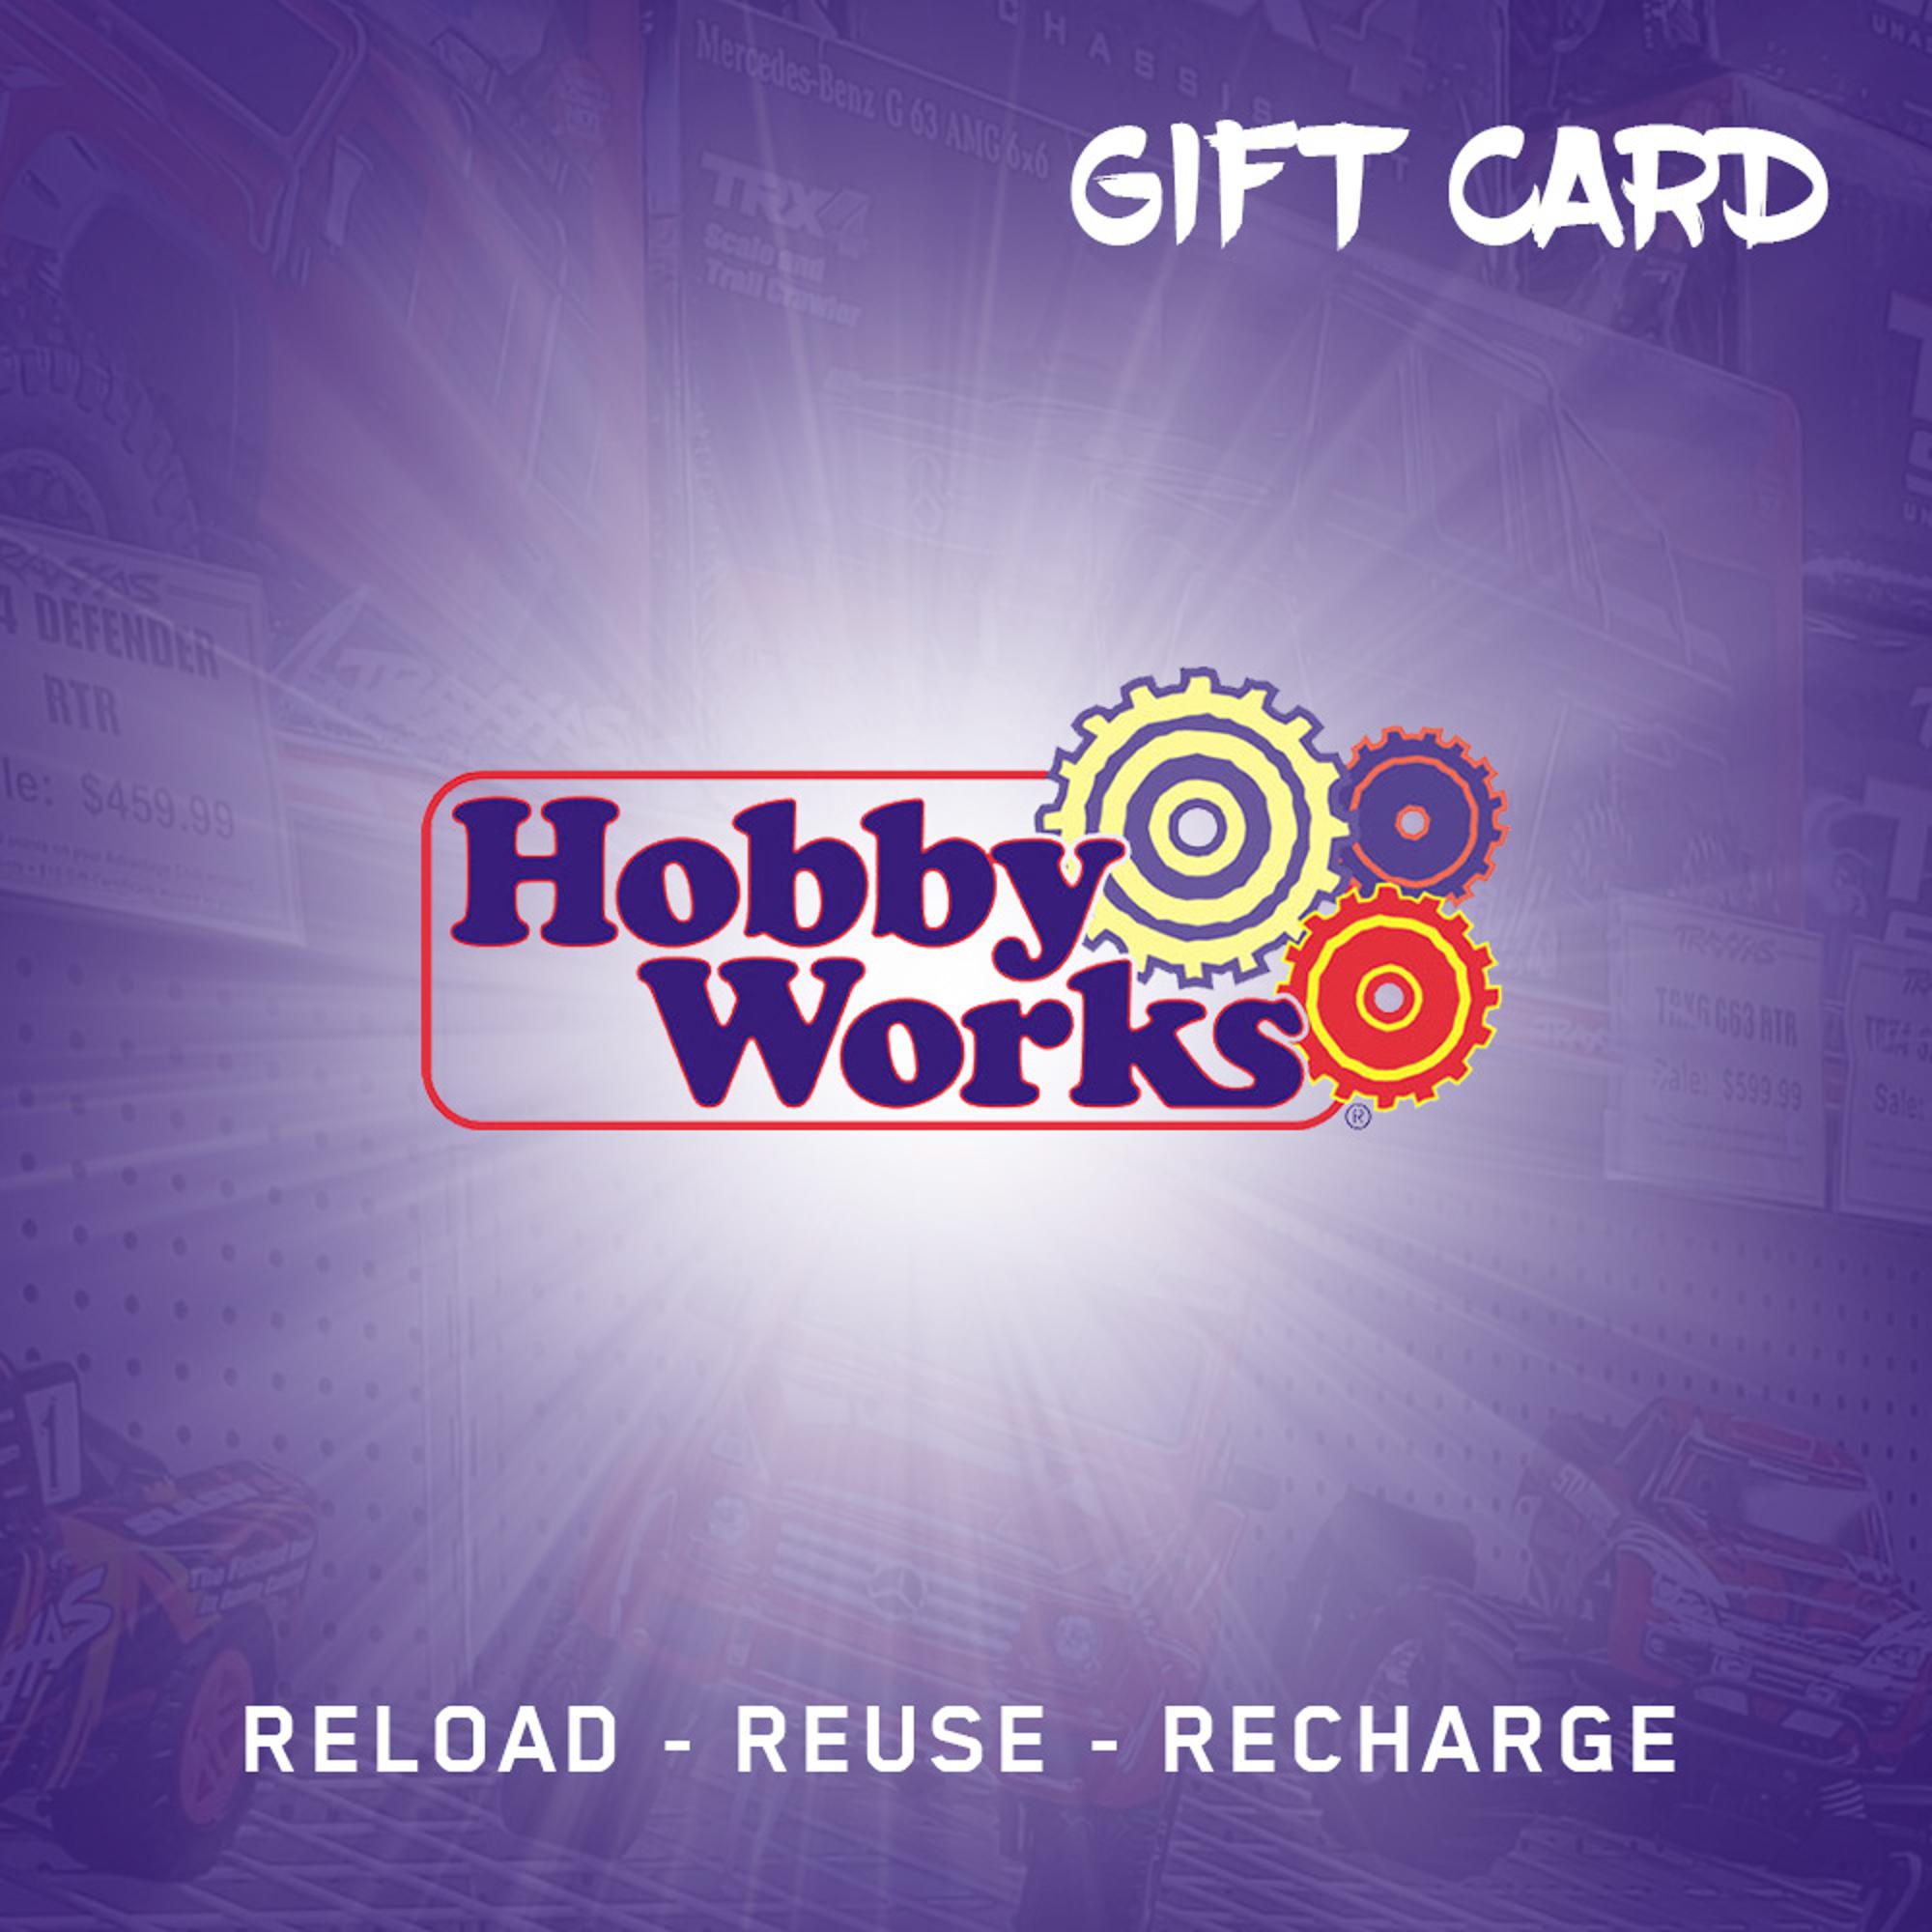 Hobby Works Gift Card: $25